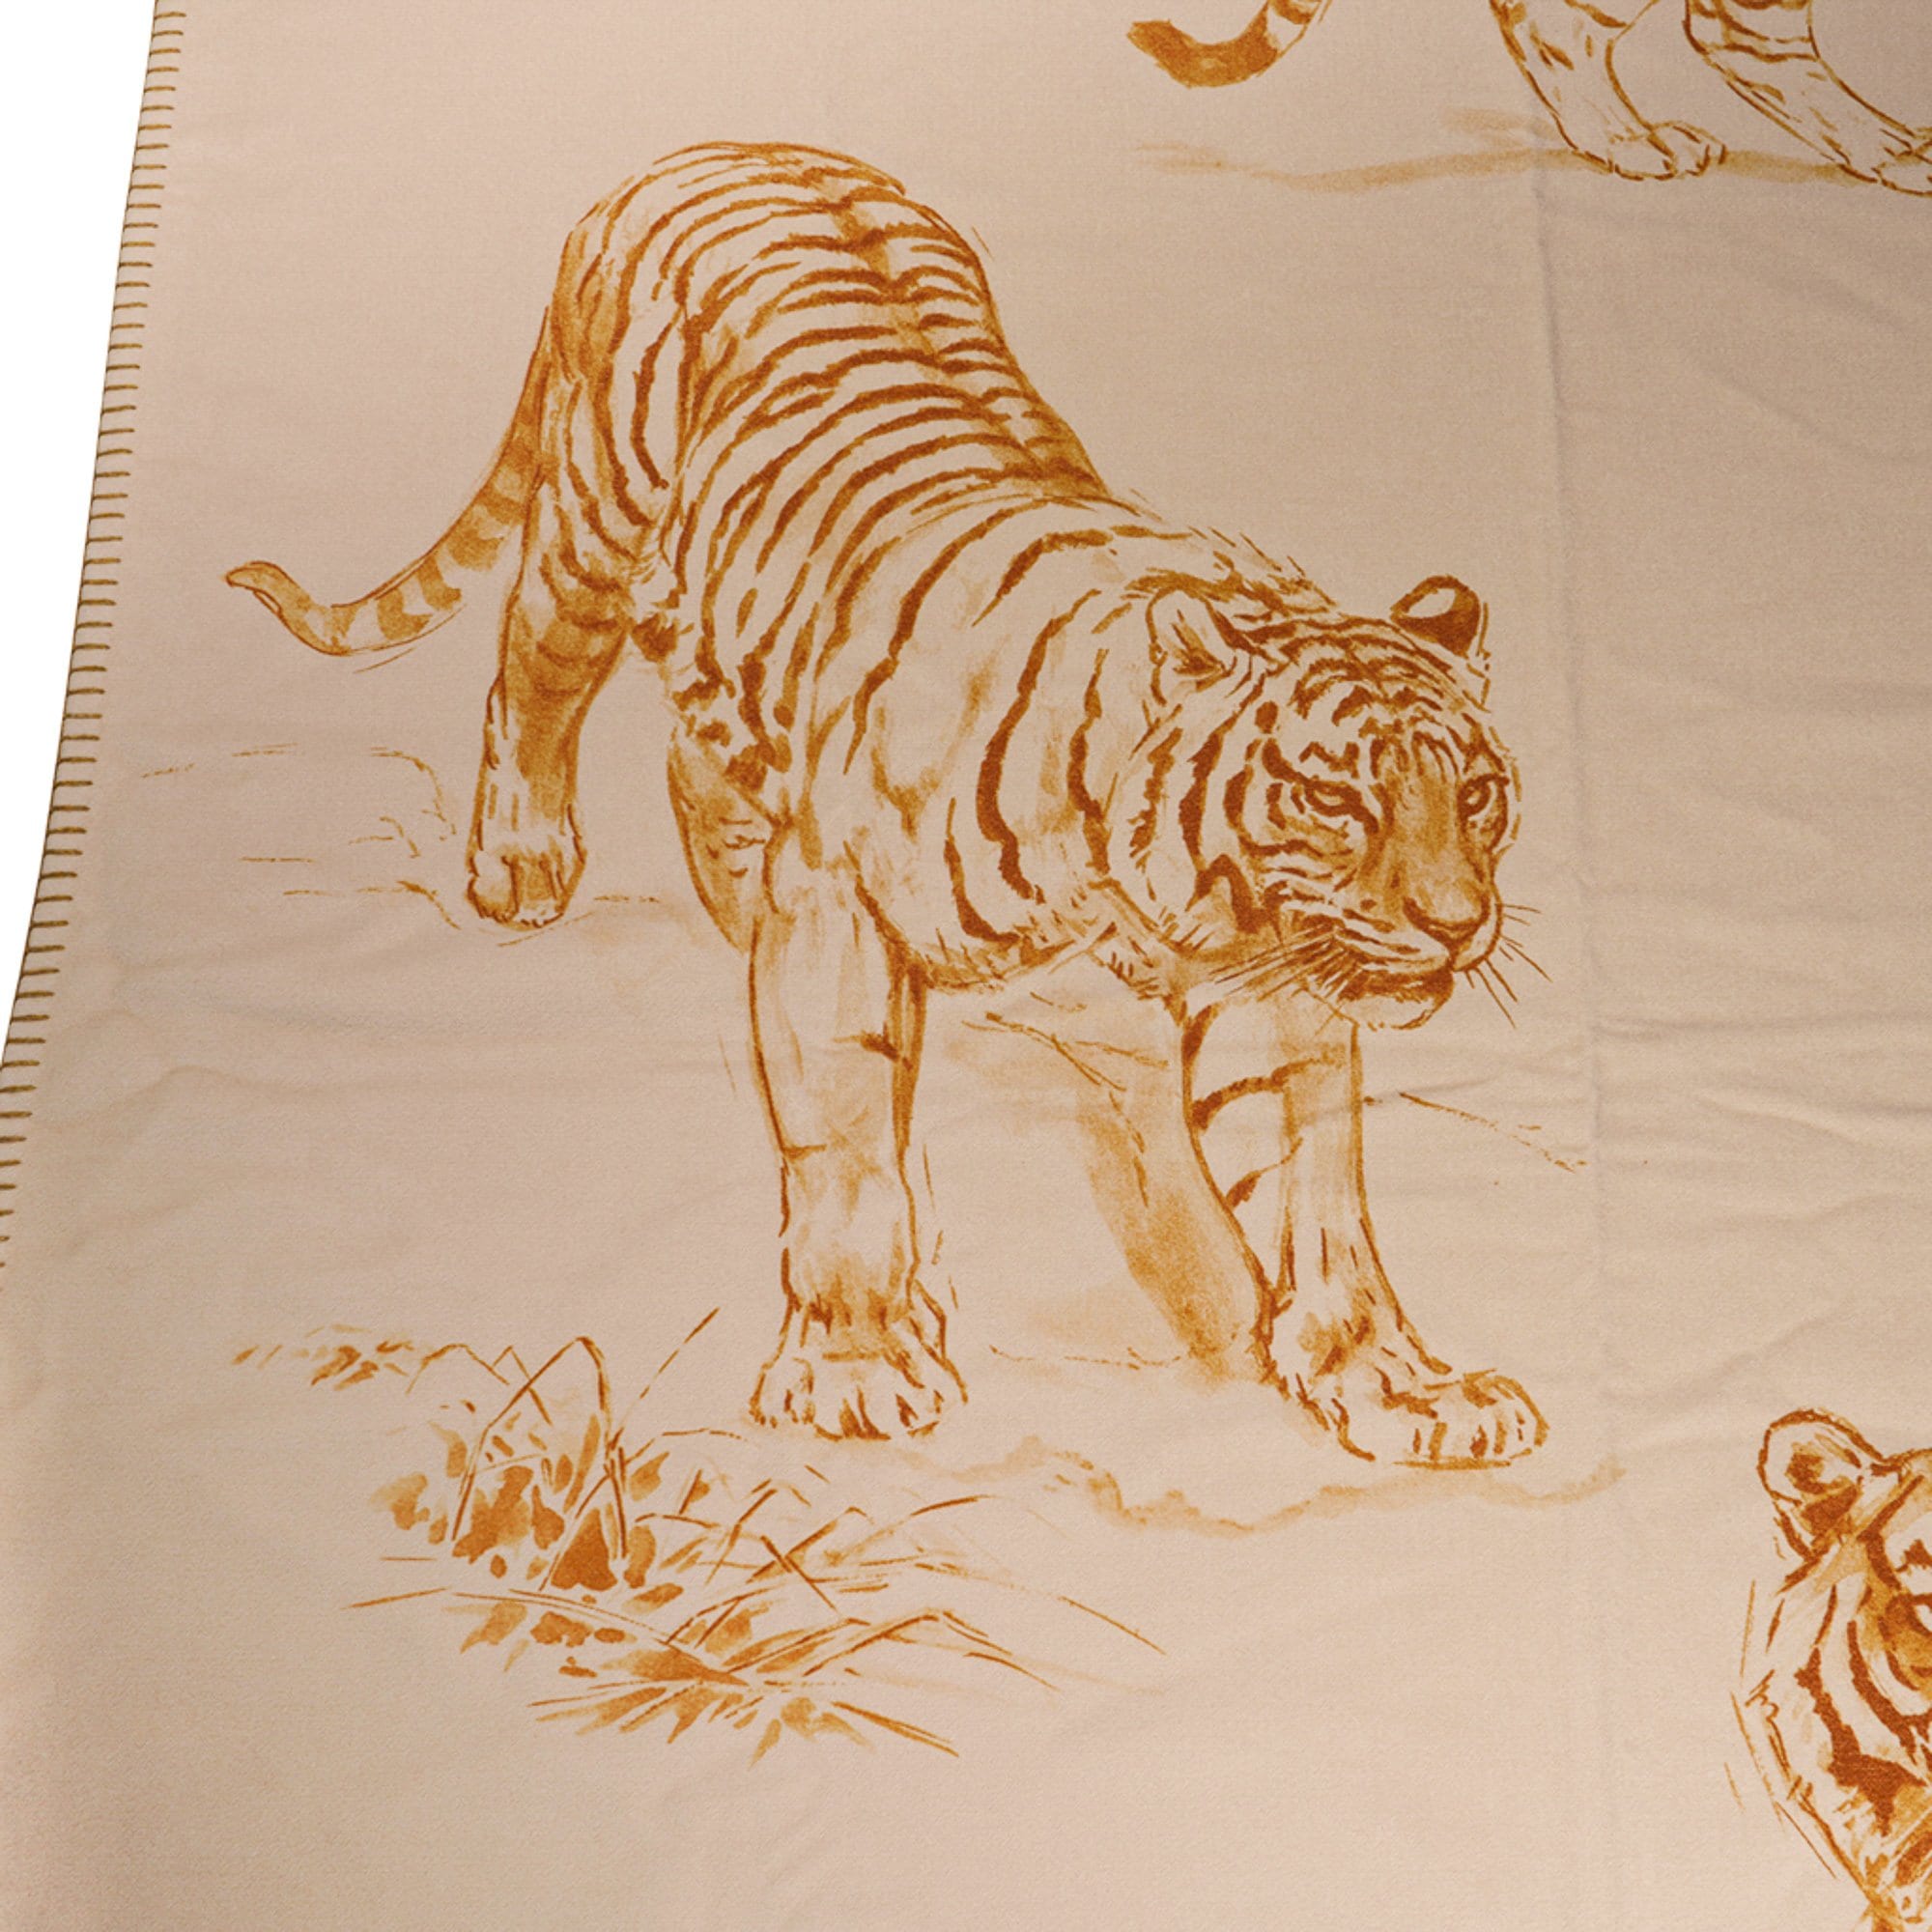 Hermes Croquis De Tigre Blanket Naturel Cashmere New w/ Box